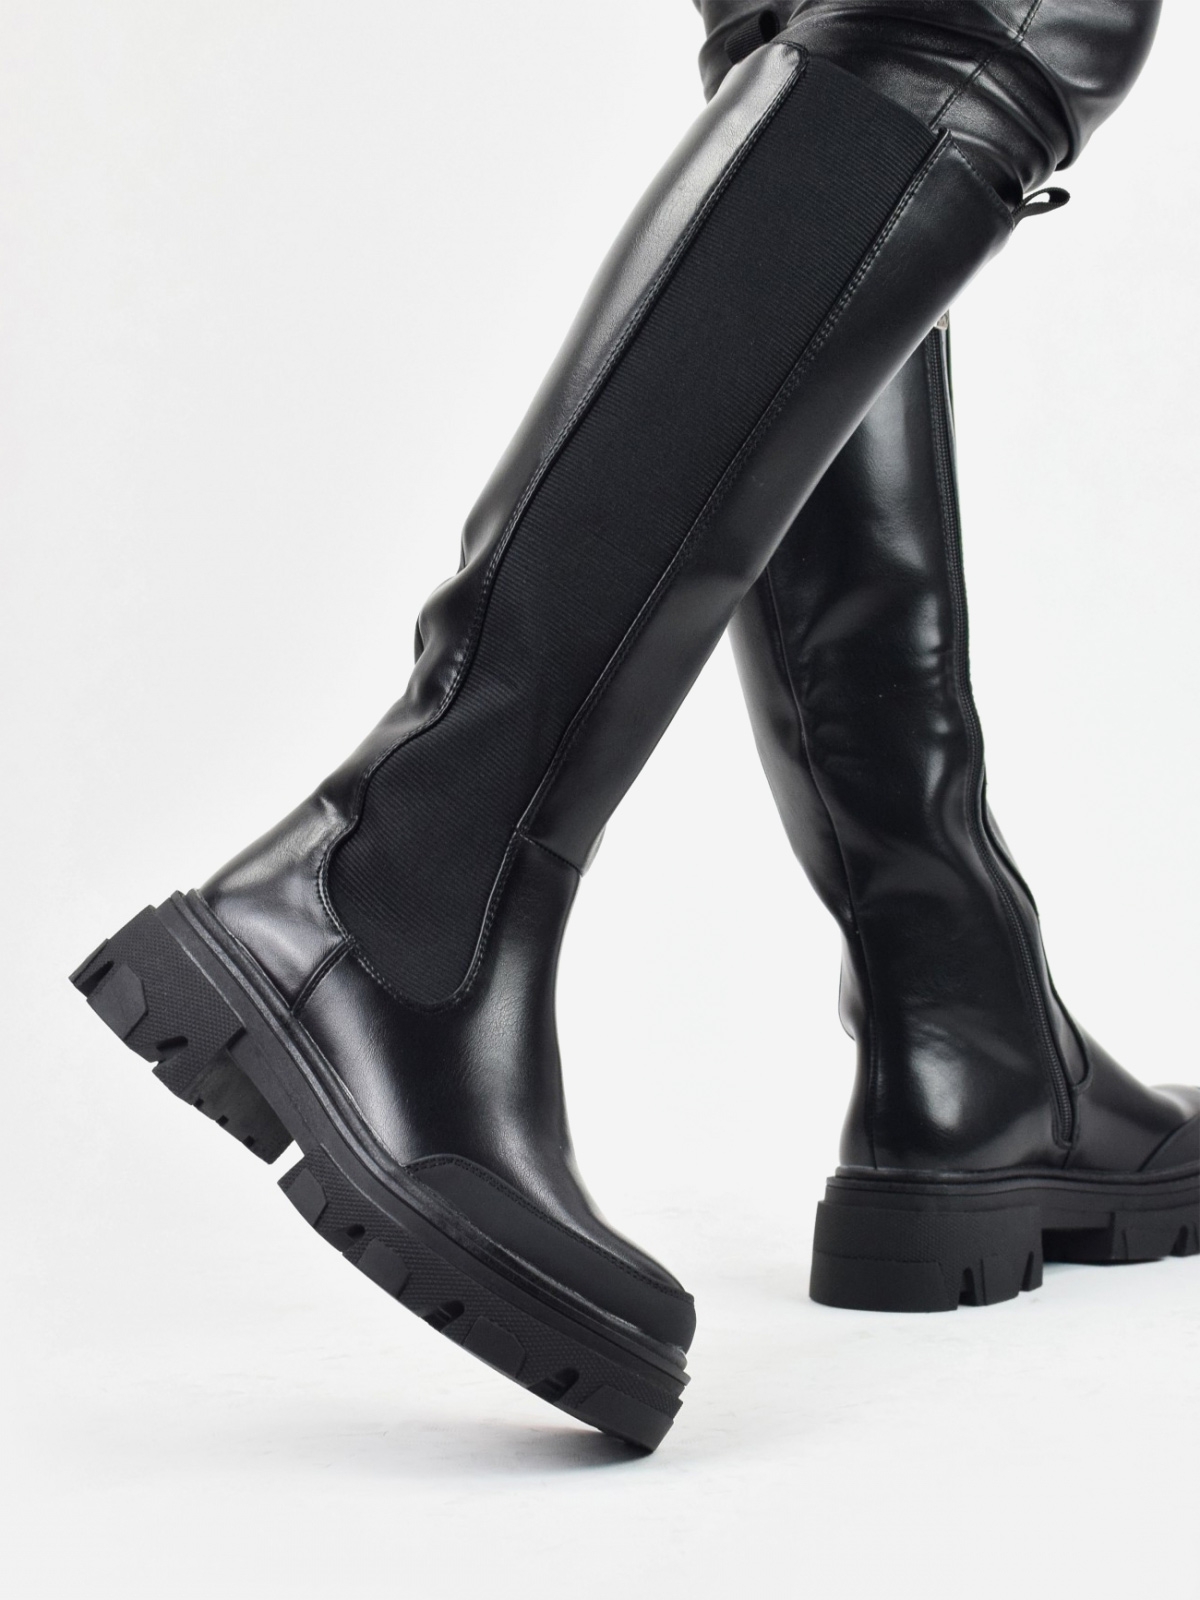 "Chelsea" women's high boots in black